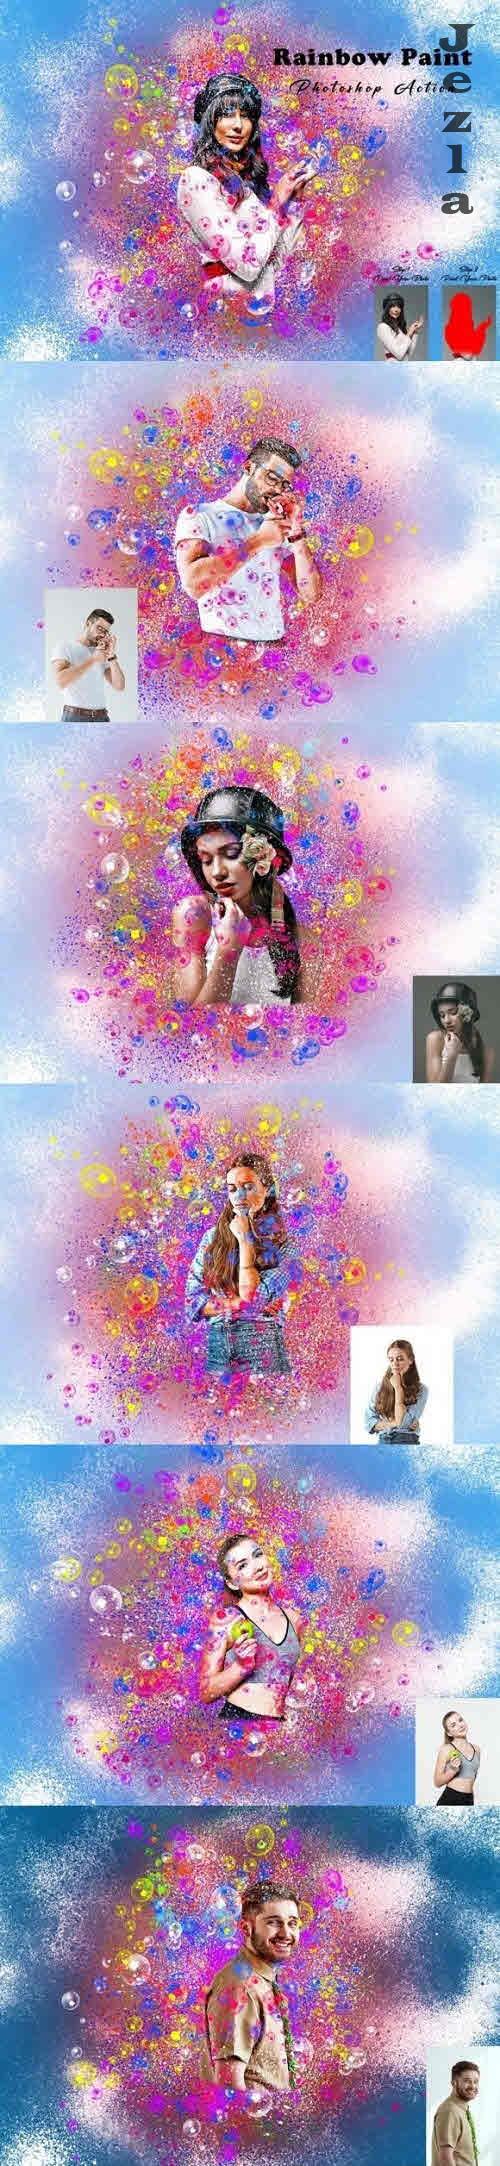 Rainbow Paint Photoshop Action - 10922150